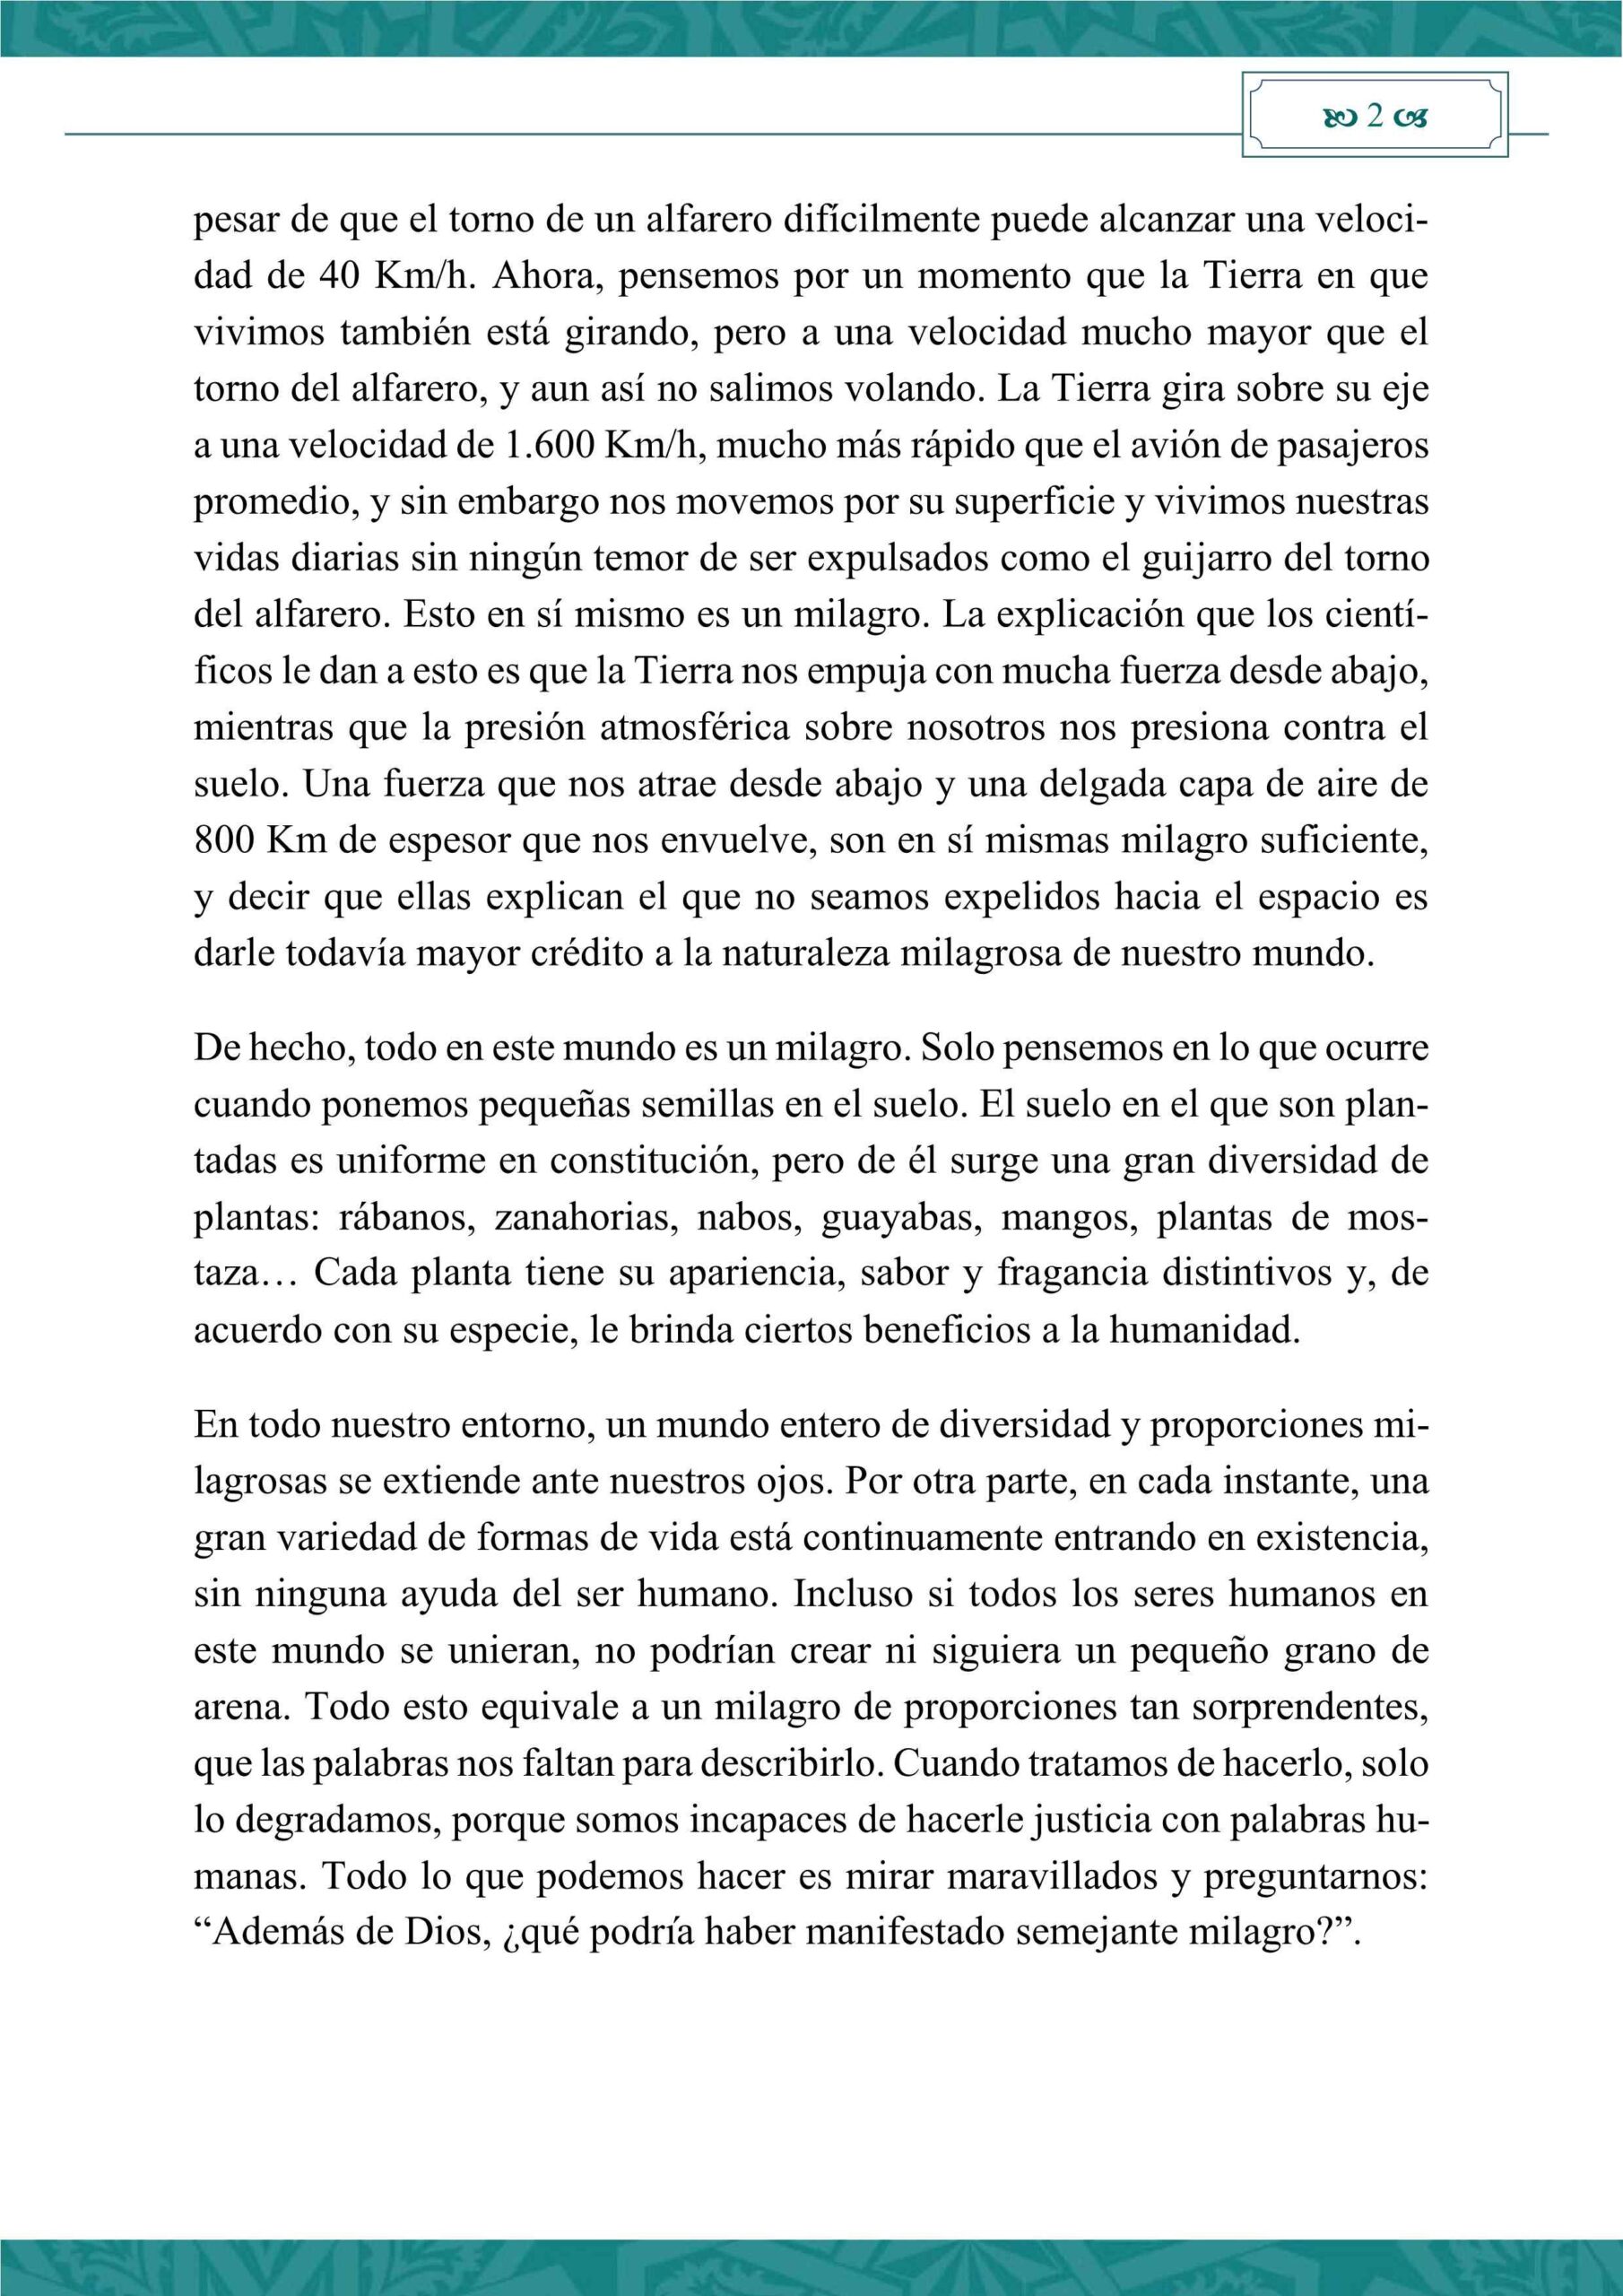 إسباني  علامات في كل مكان تدل على وجود الله  Las señales de Dios están por todas partes.pdf, 9-Sayfa 